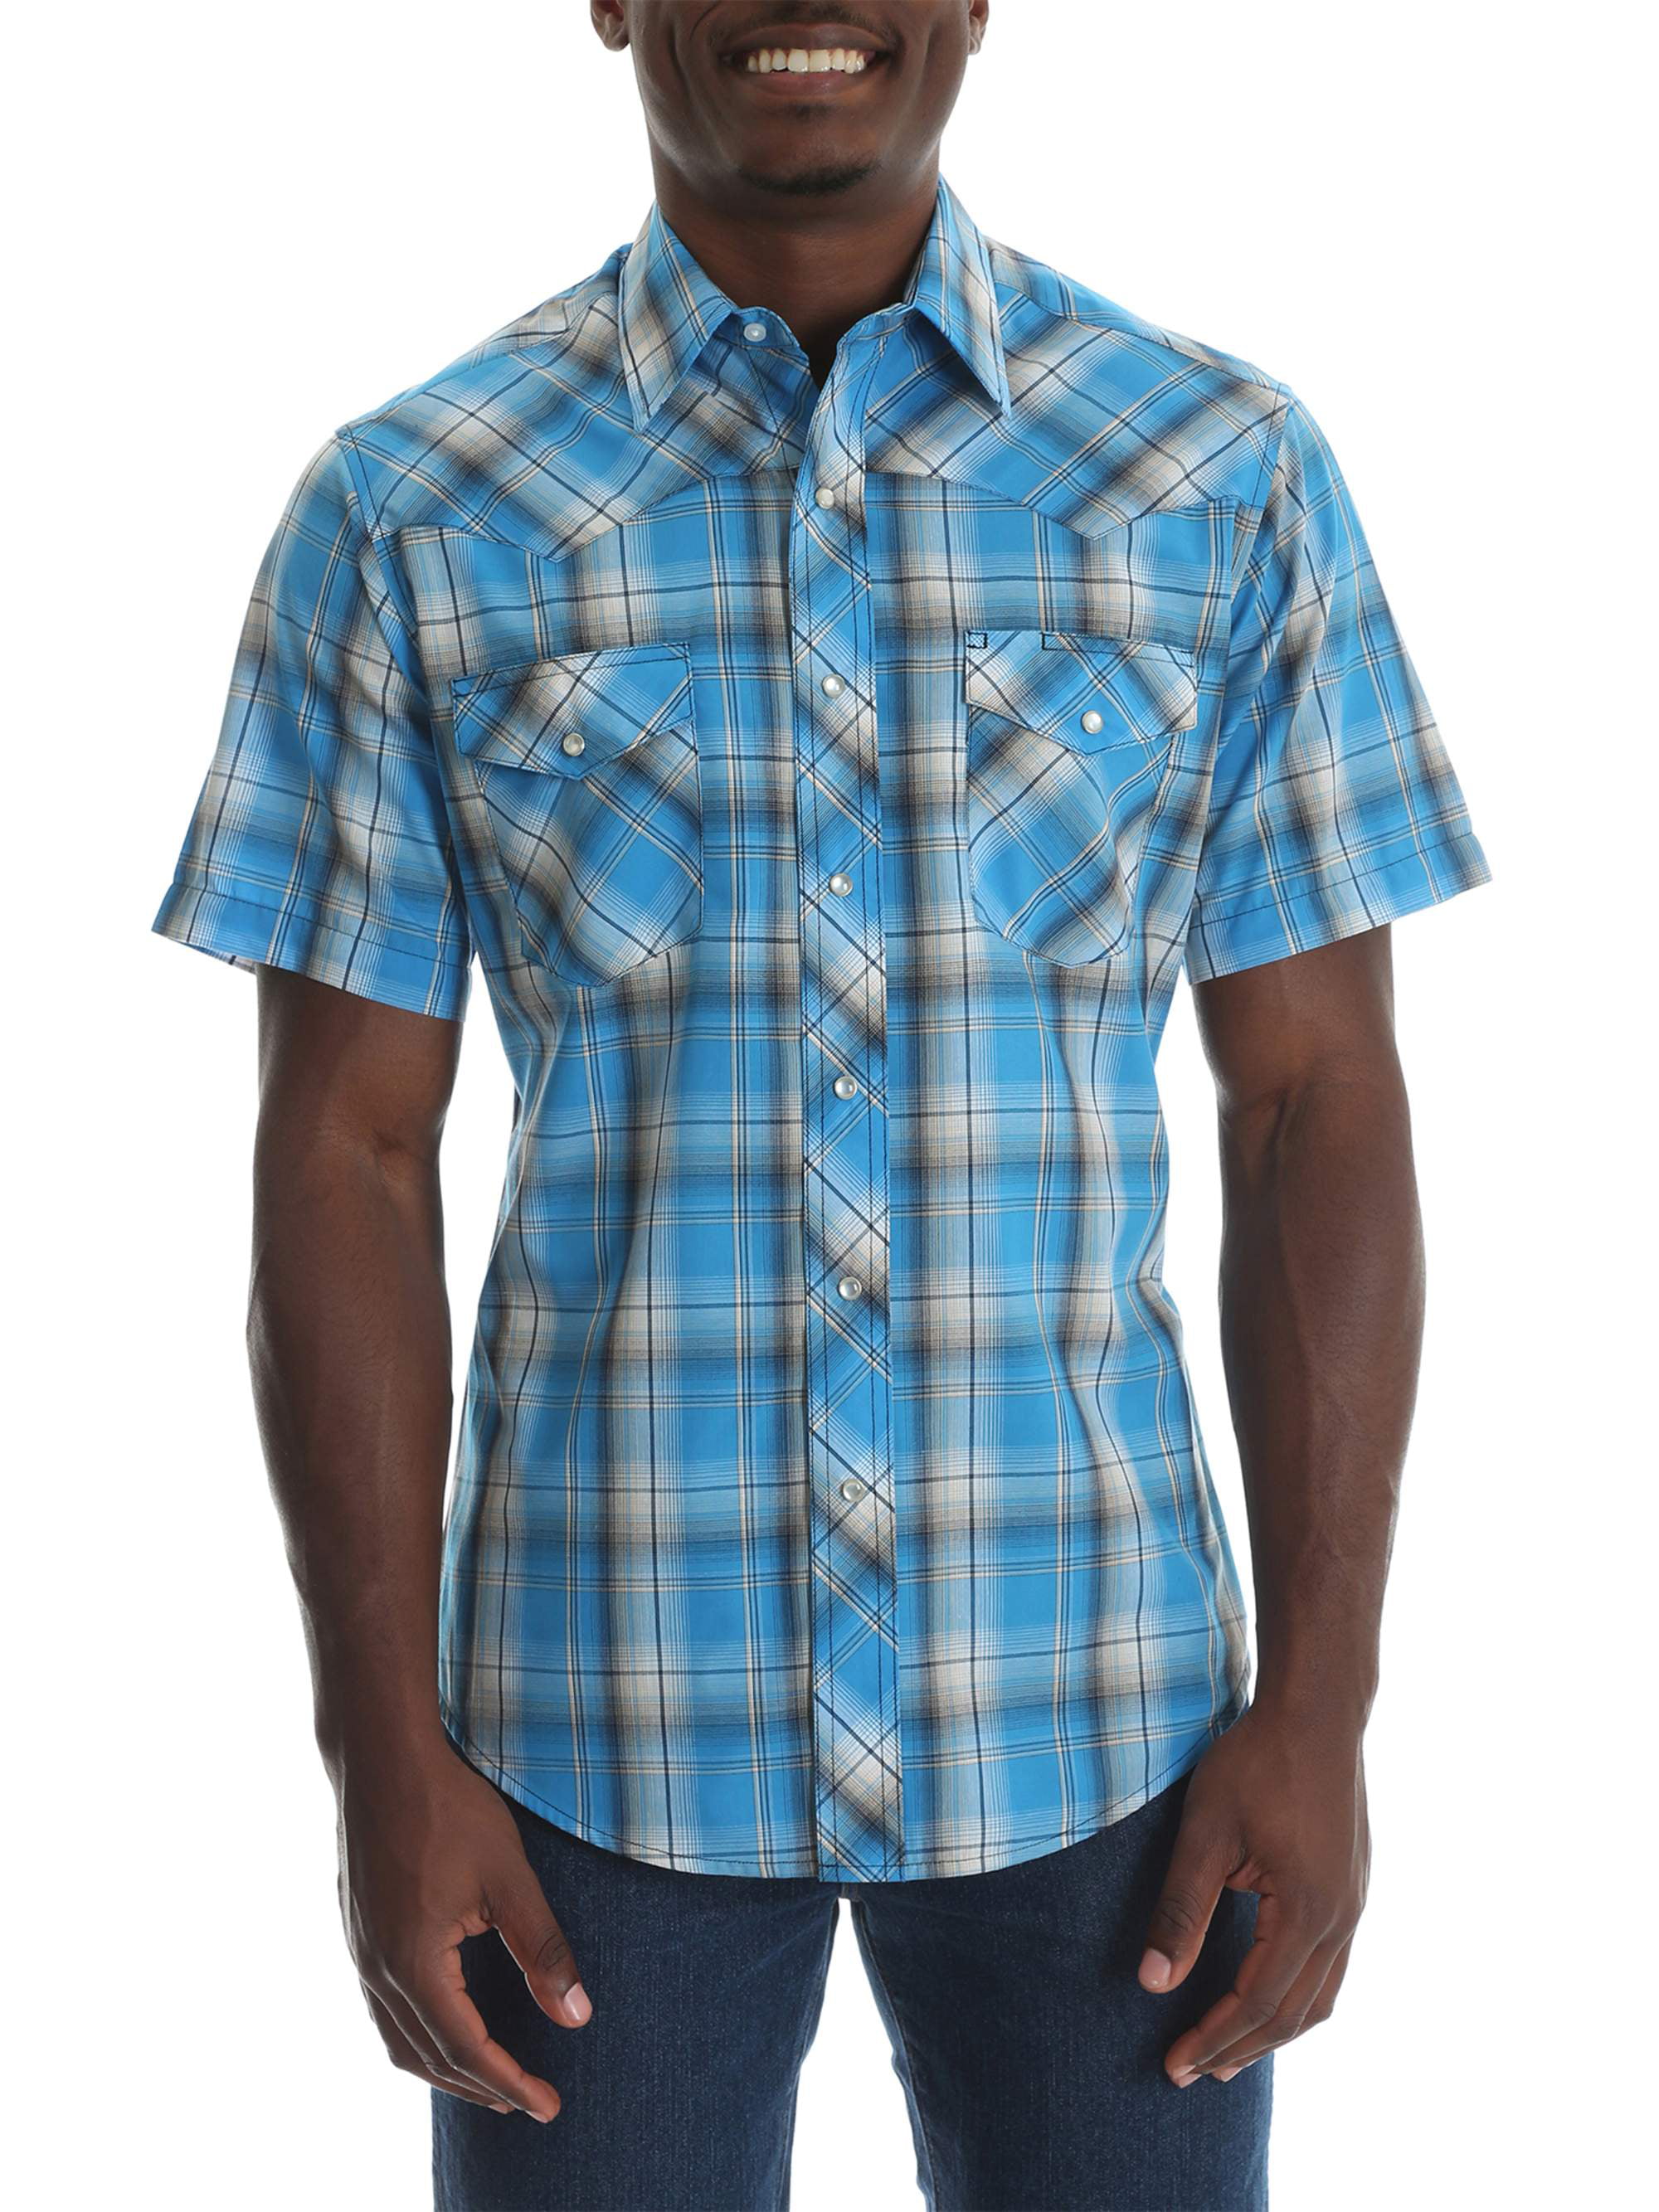 Big Men's Short Sleeve Western Shirt - Walmart.com